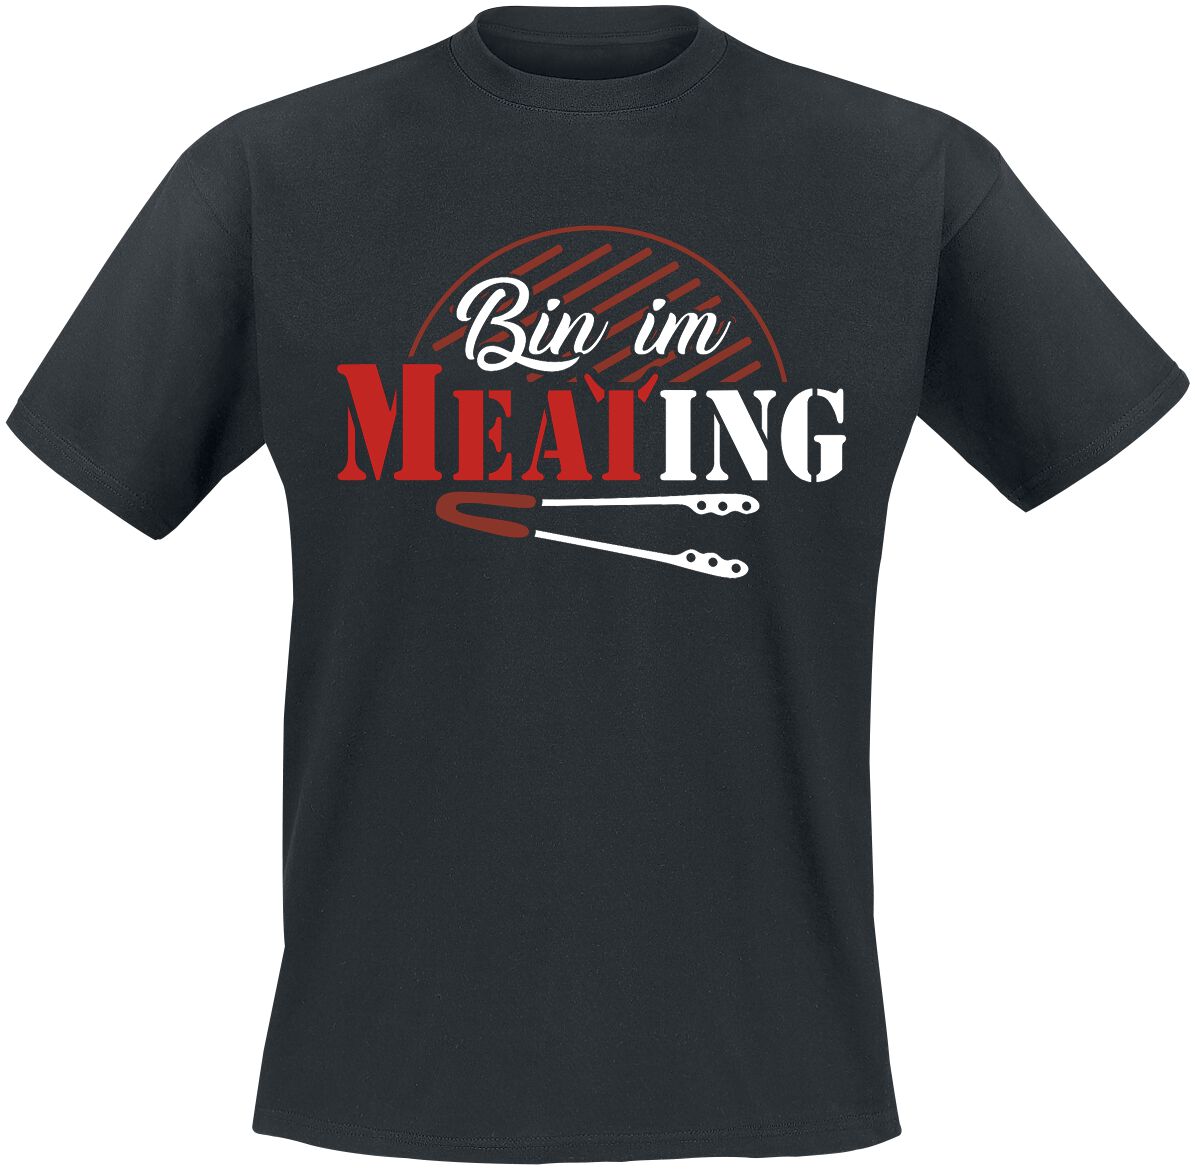 Food Bin im Meating T-Shirt schwarz in XXL